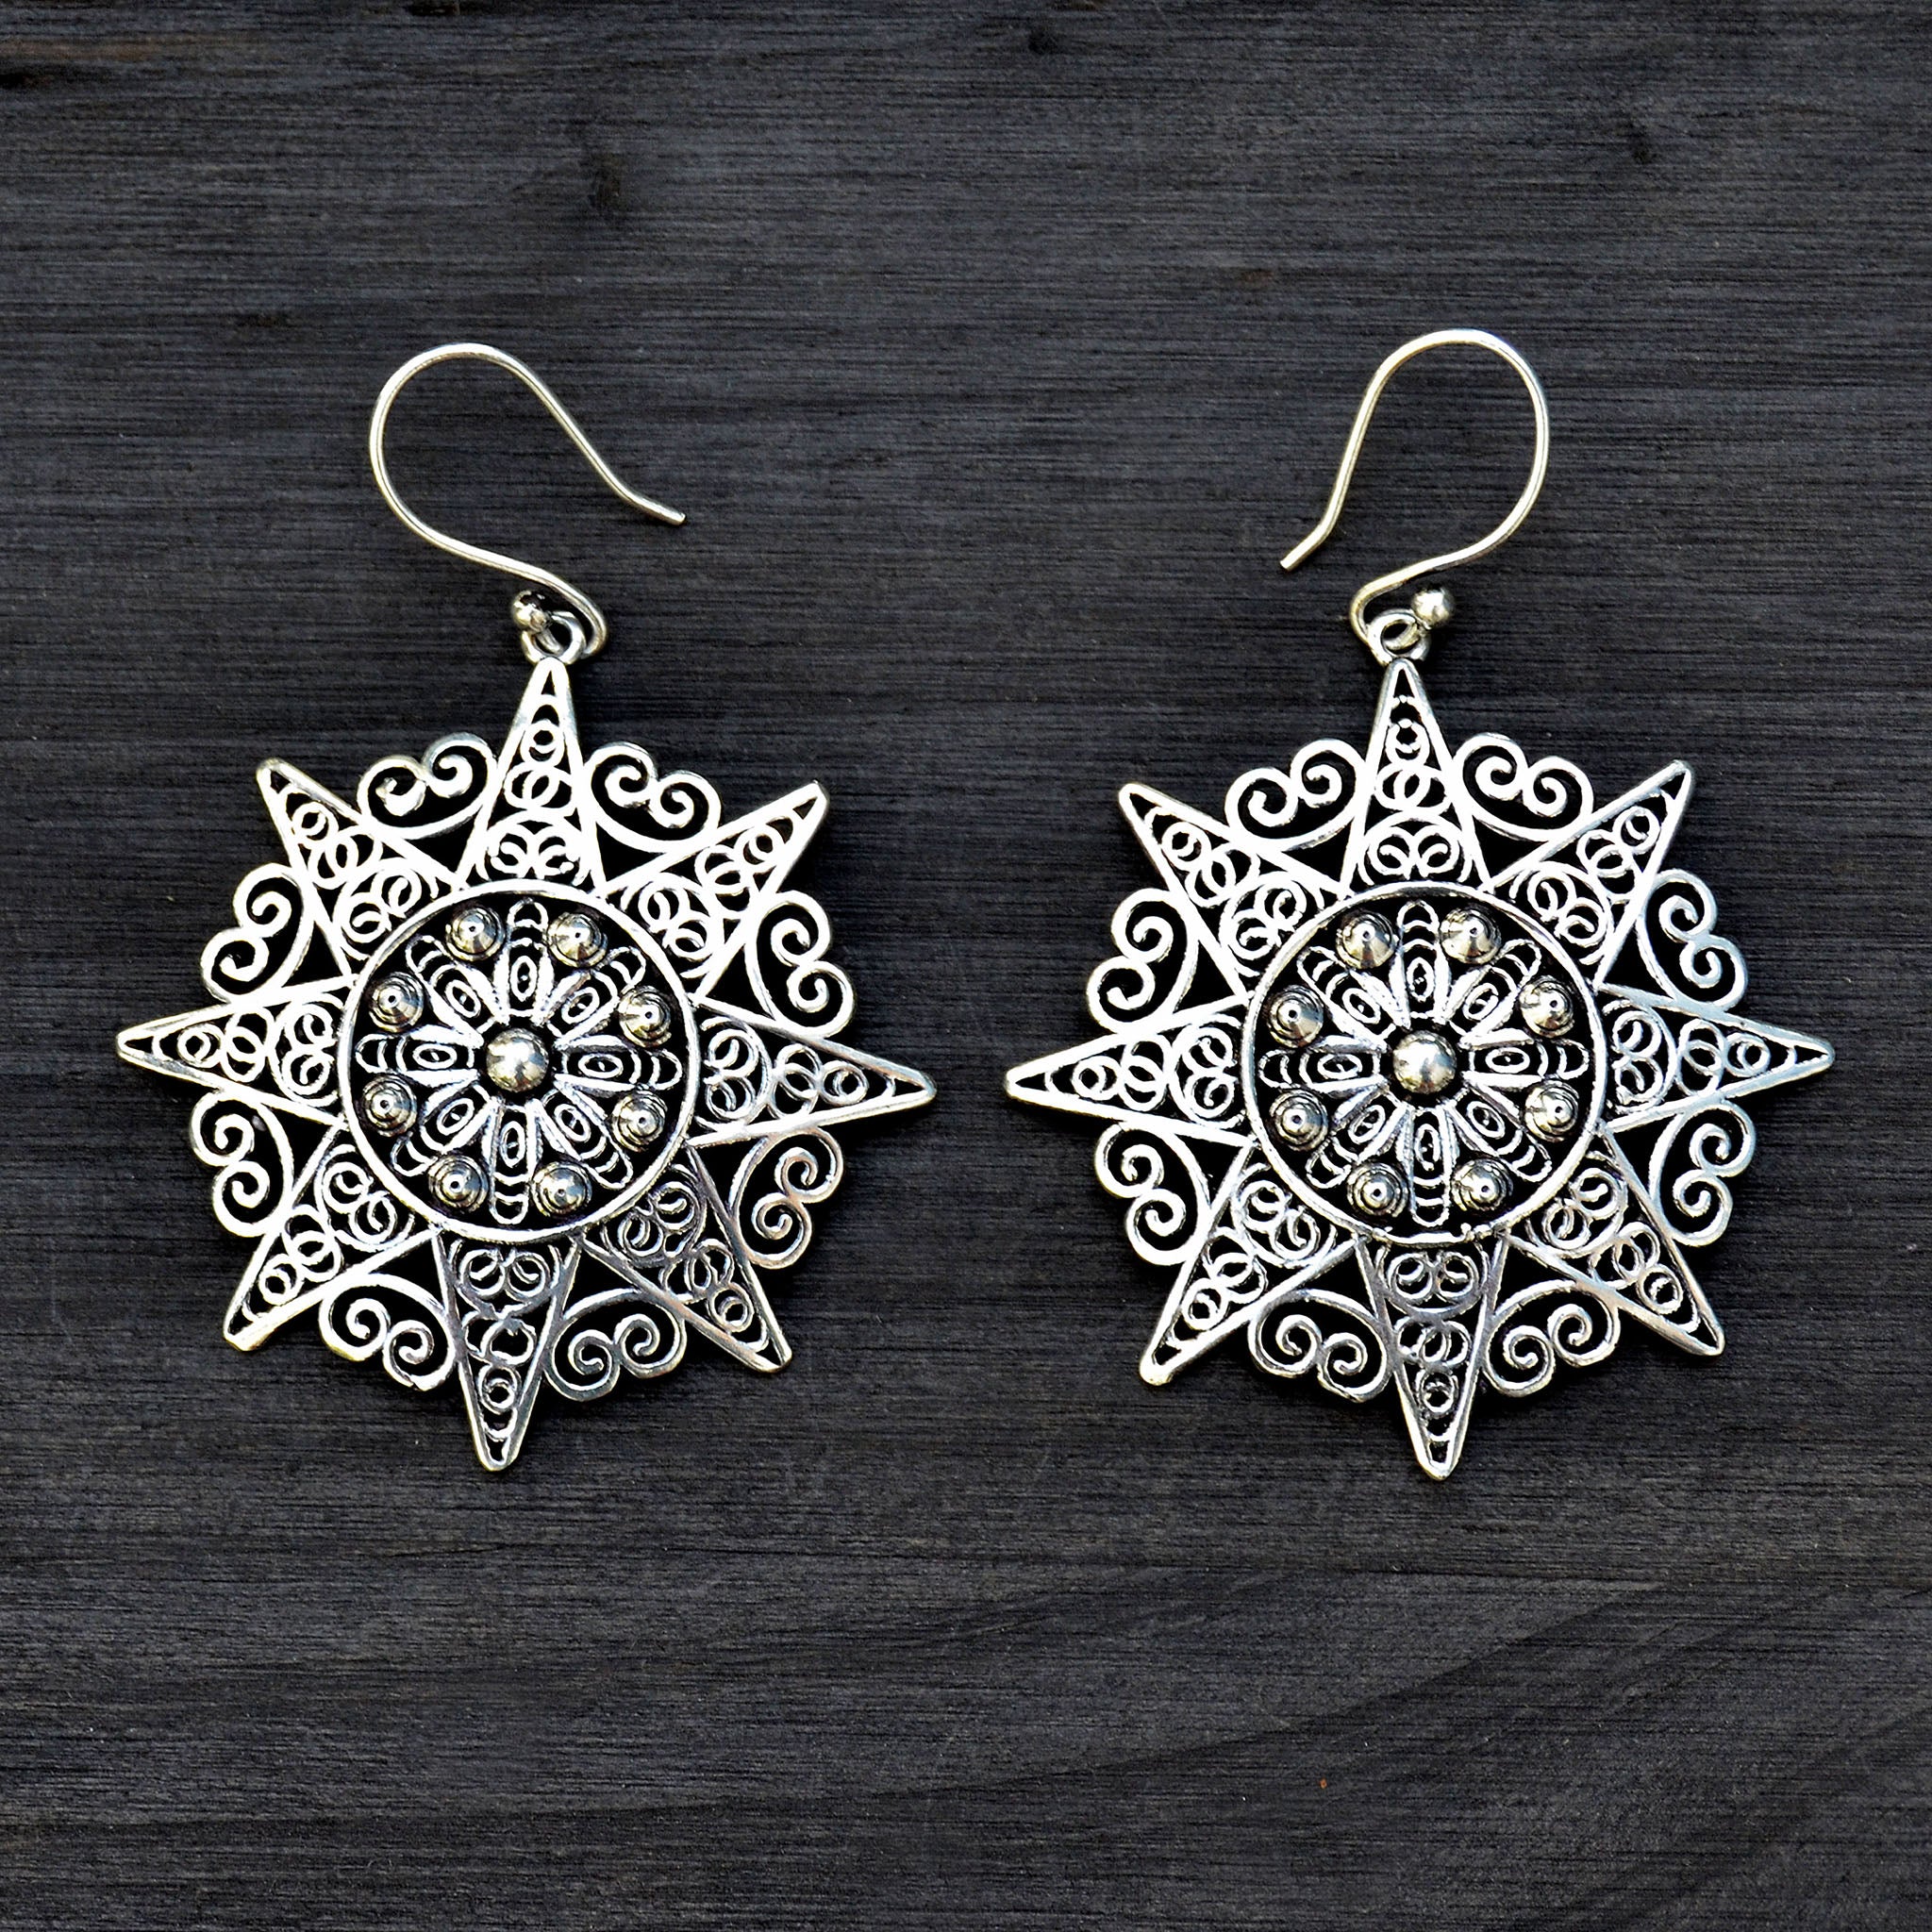 Ethnic silver filigree mandala earrings on black background